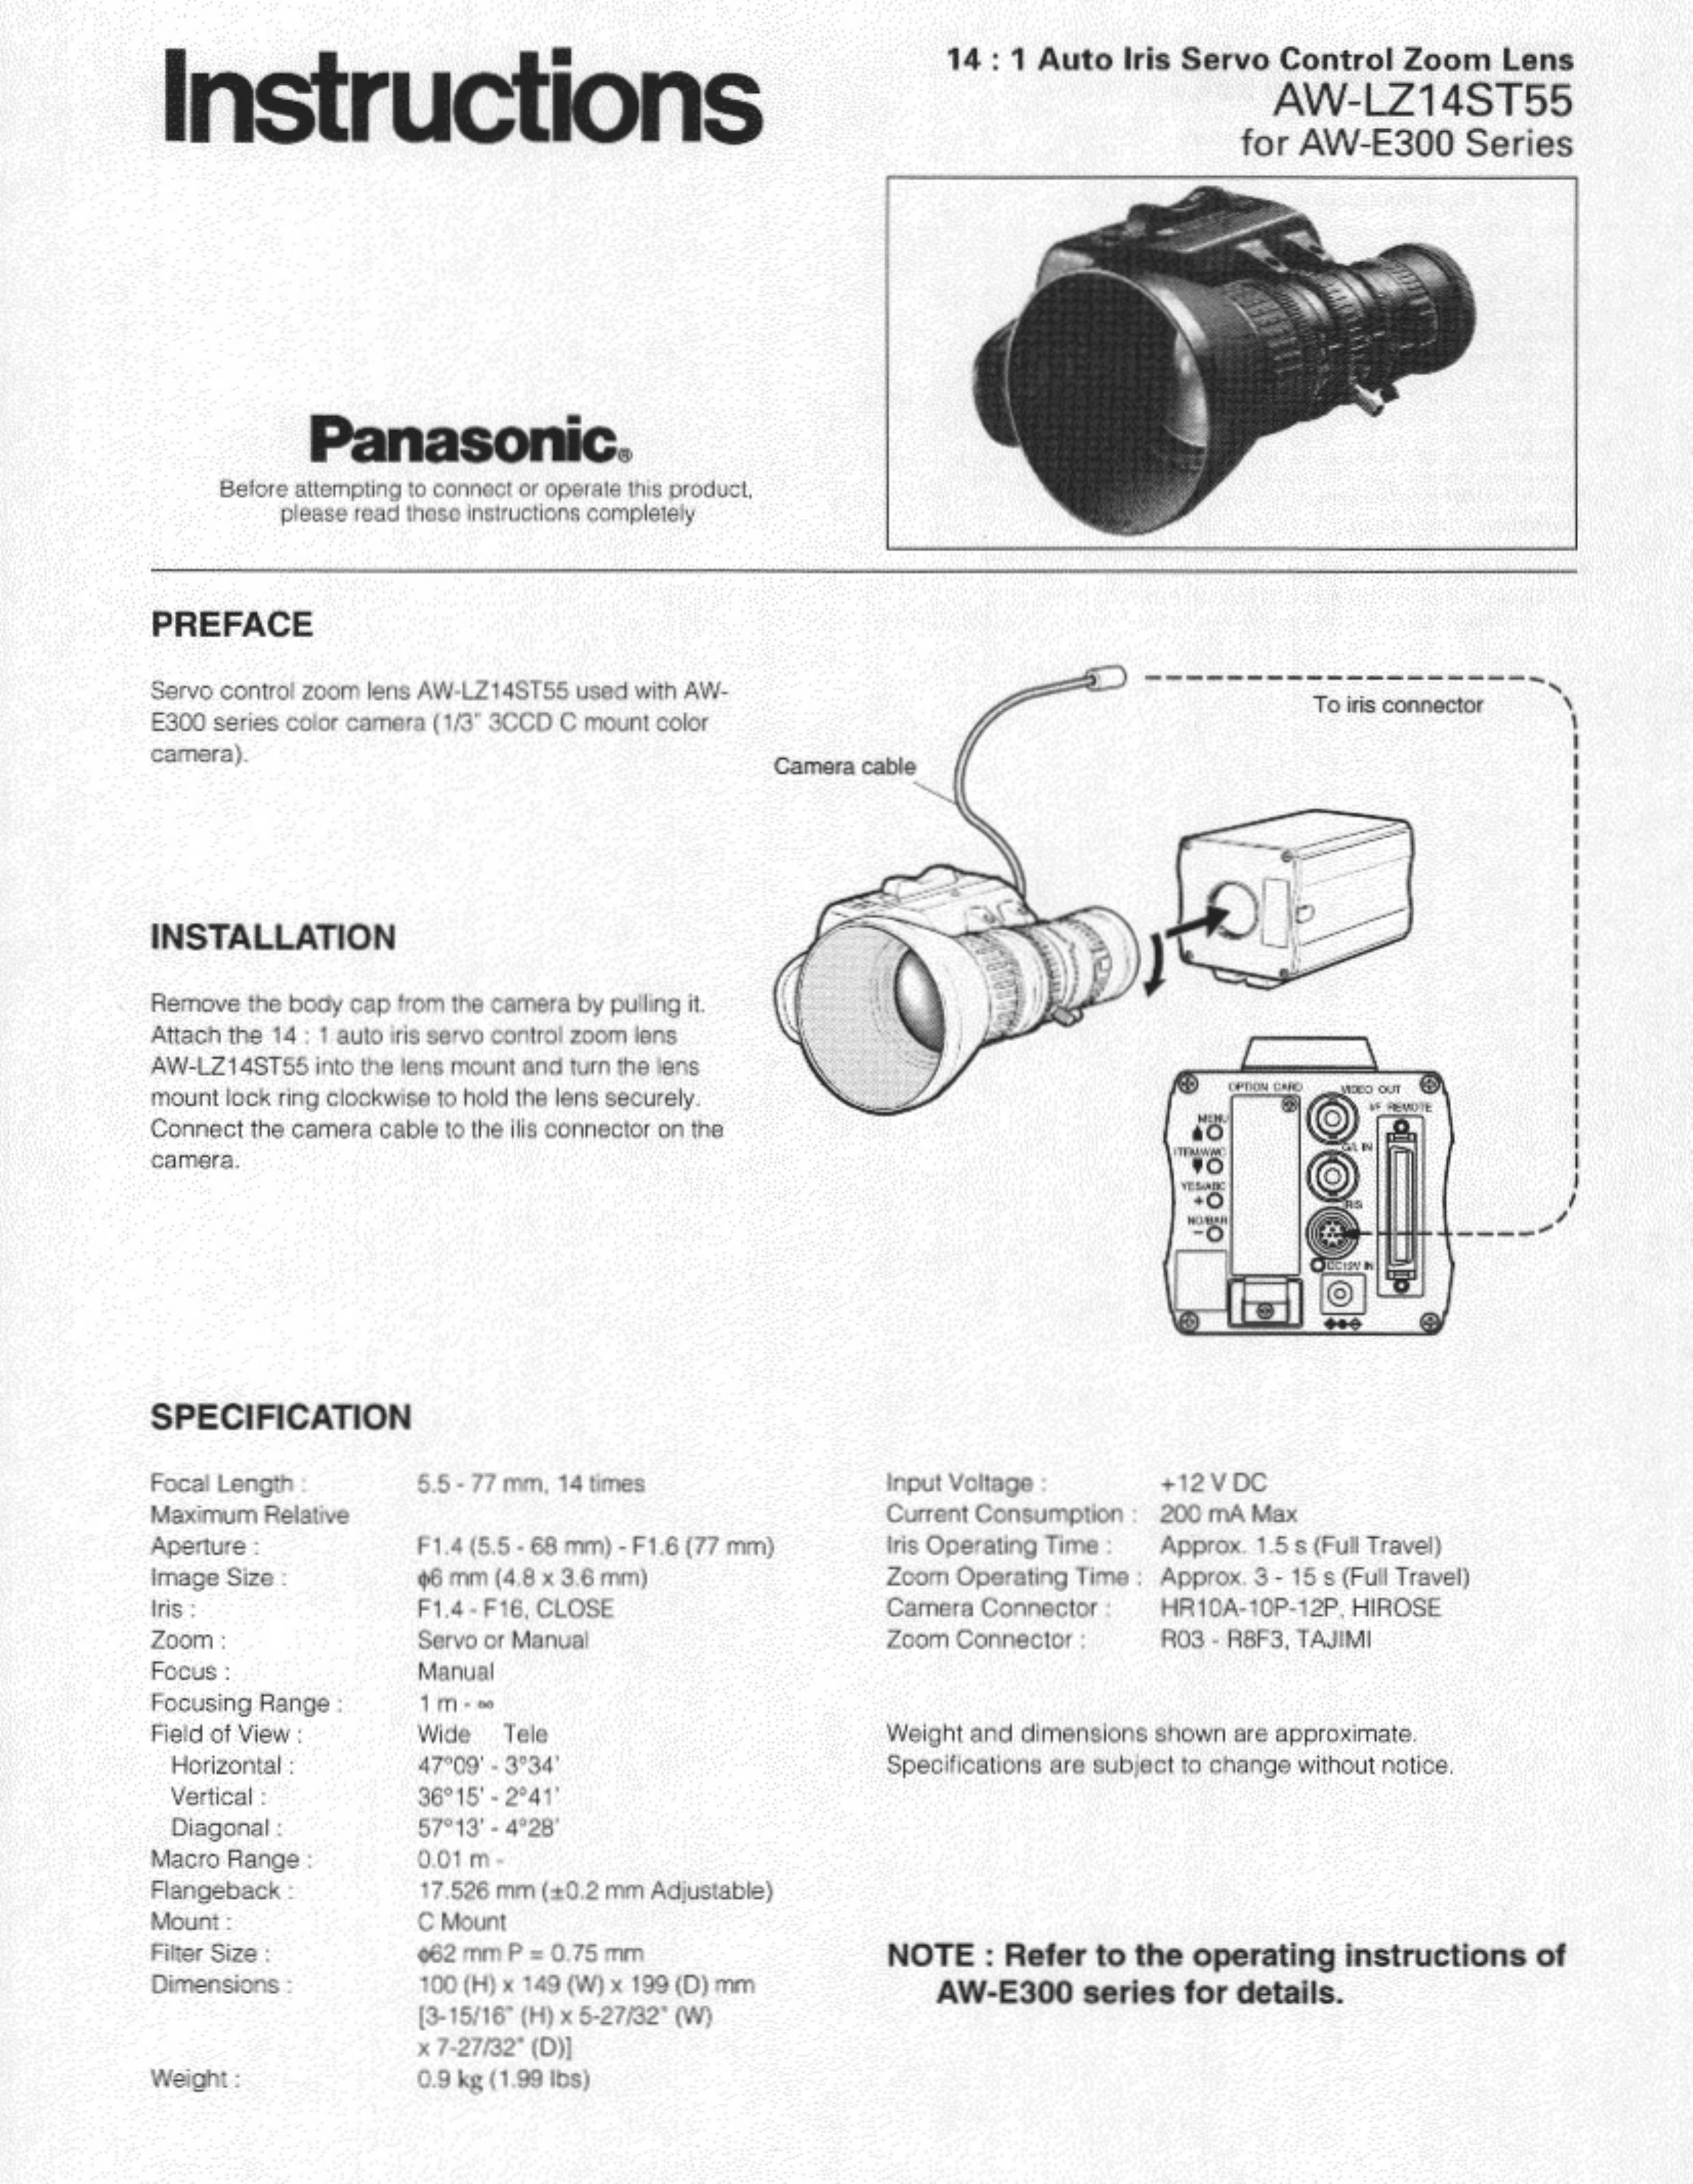 Panasonic AW-LZ14ST55 Camera Lens User Manual